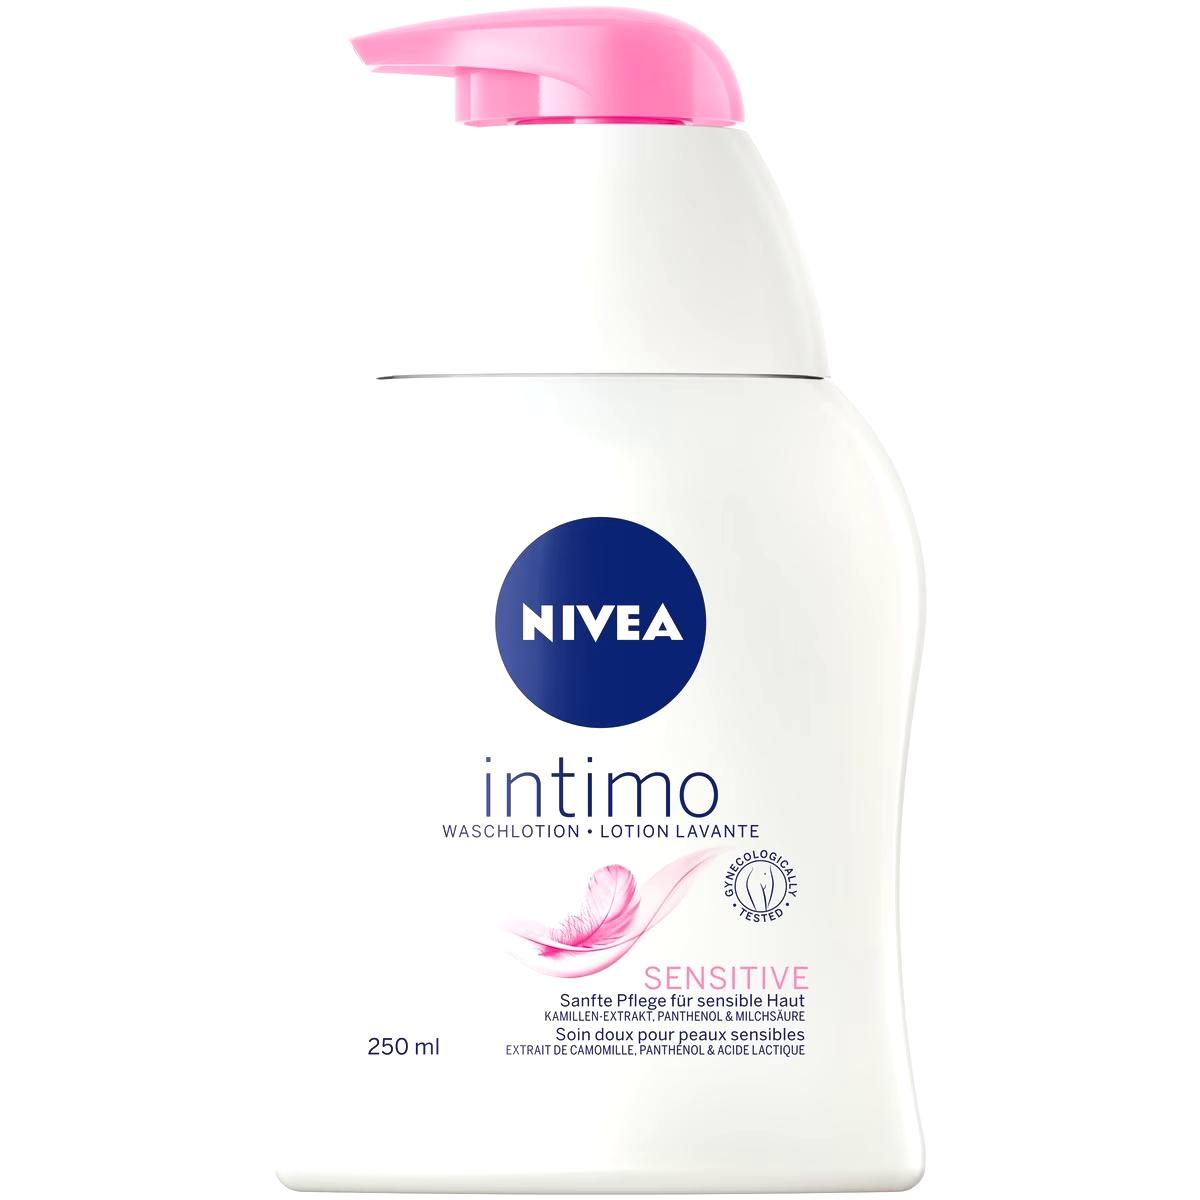 Intimo washing lotion sensitive